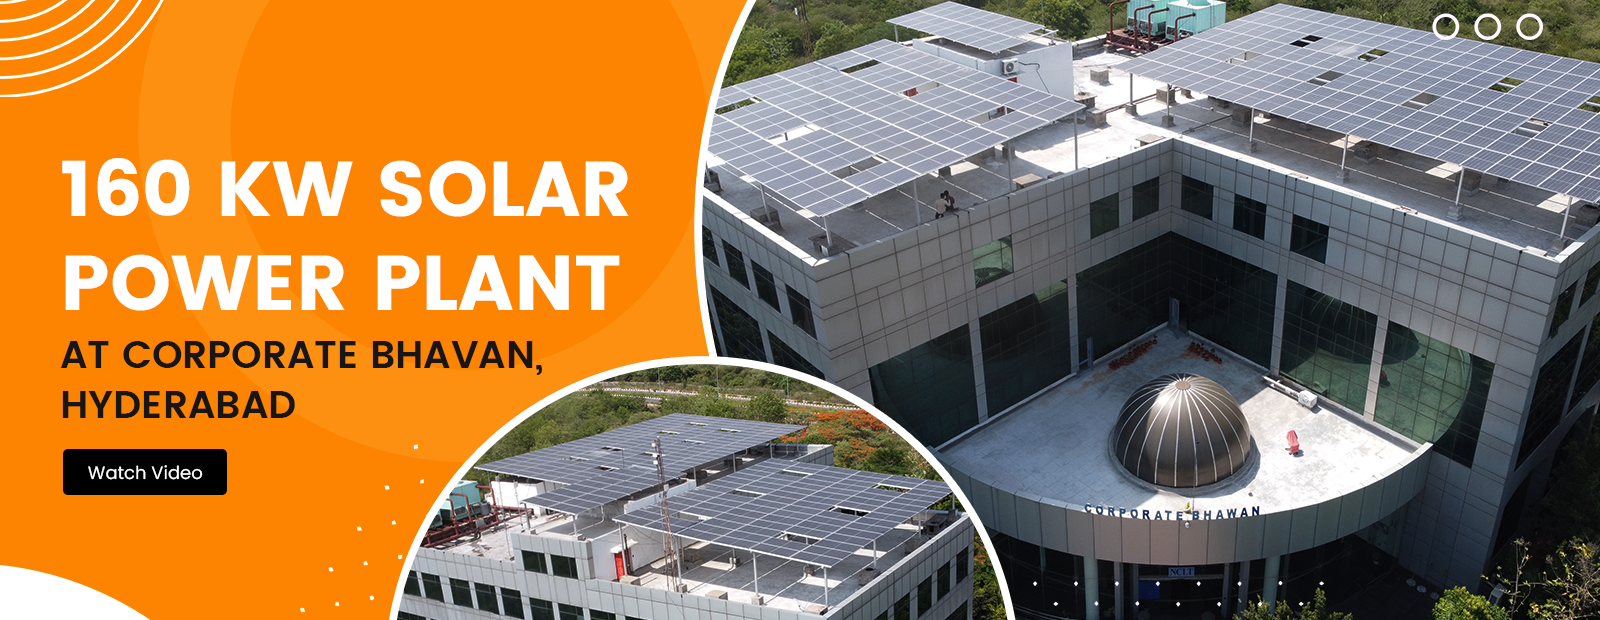 160 kw Solar Power Plant in Hyderabad